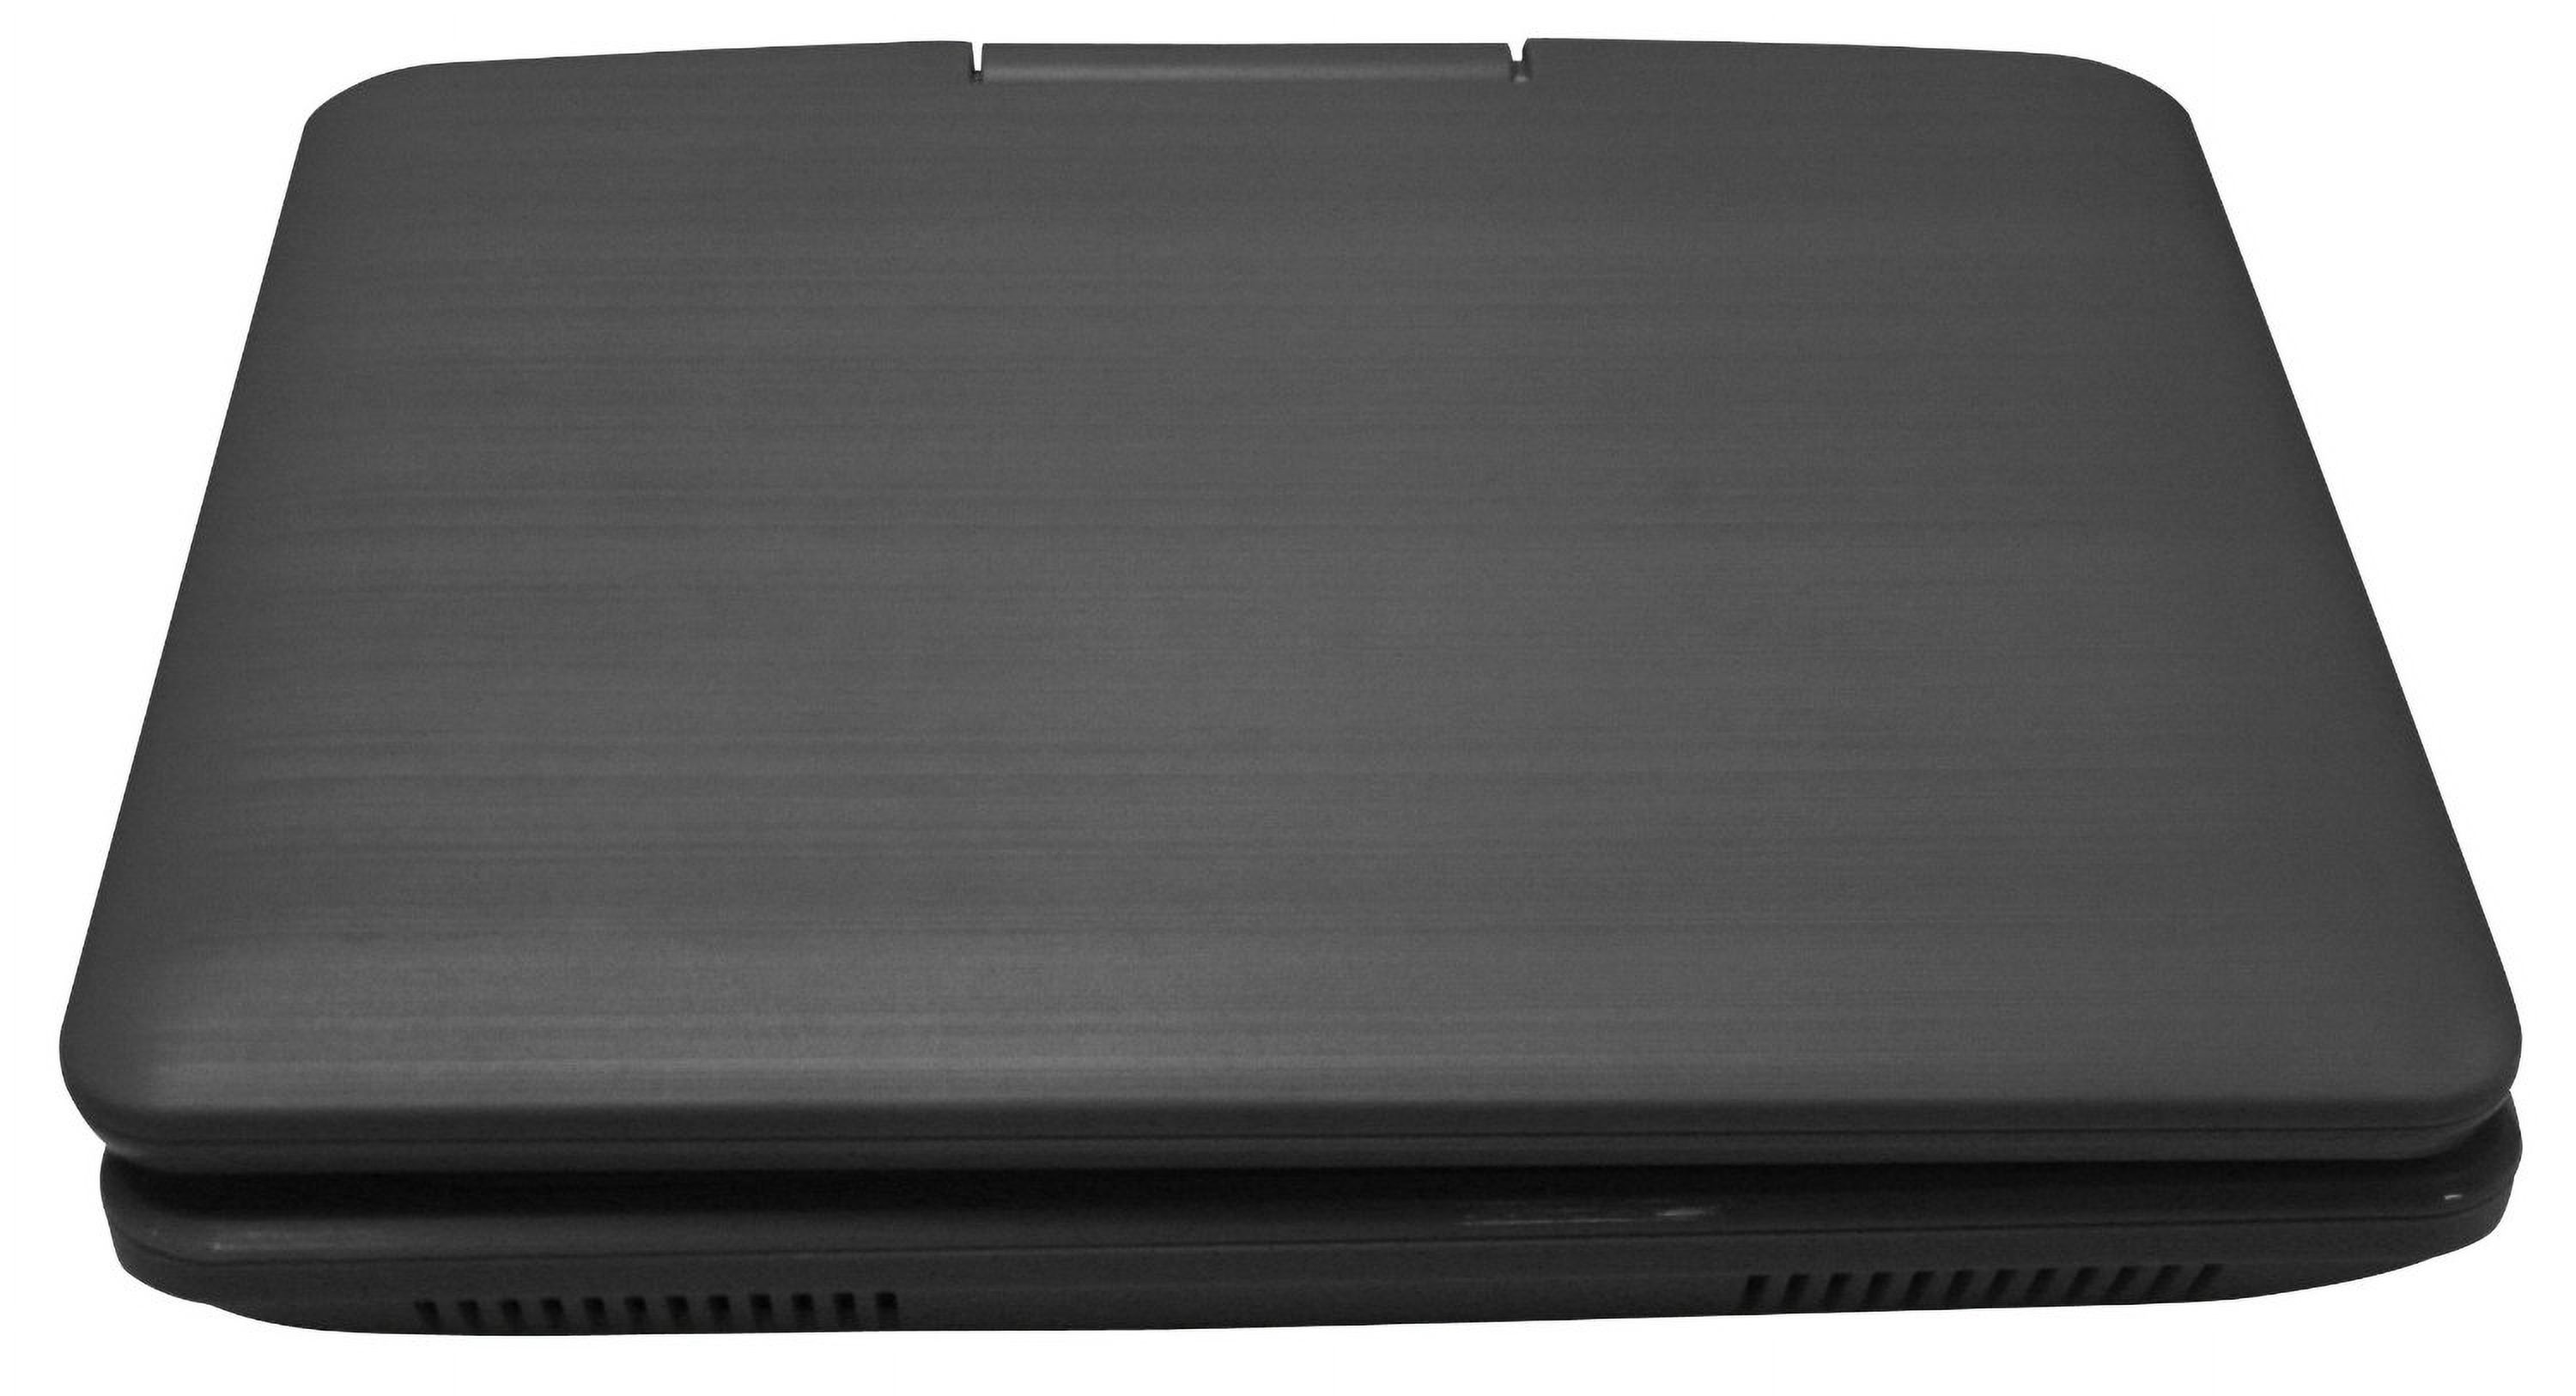 Sylvania SDVD7040-Black 7" Swivel Screen Portable DVD & Media Player - image 4 of 4